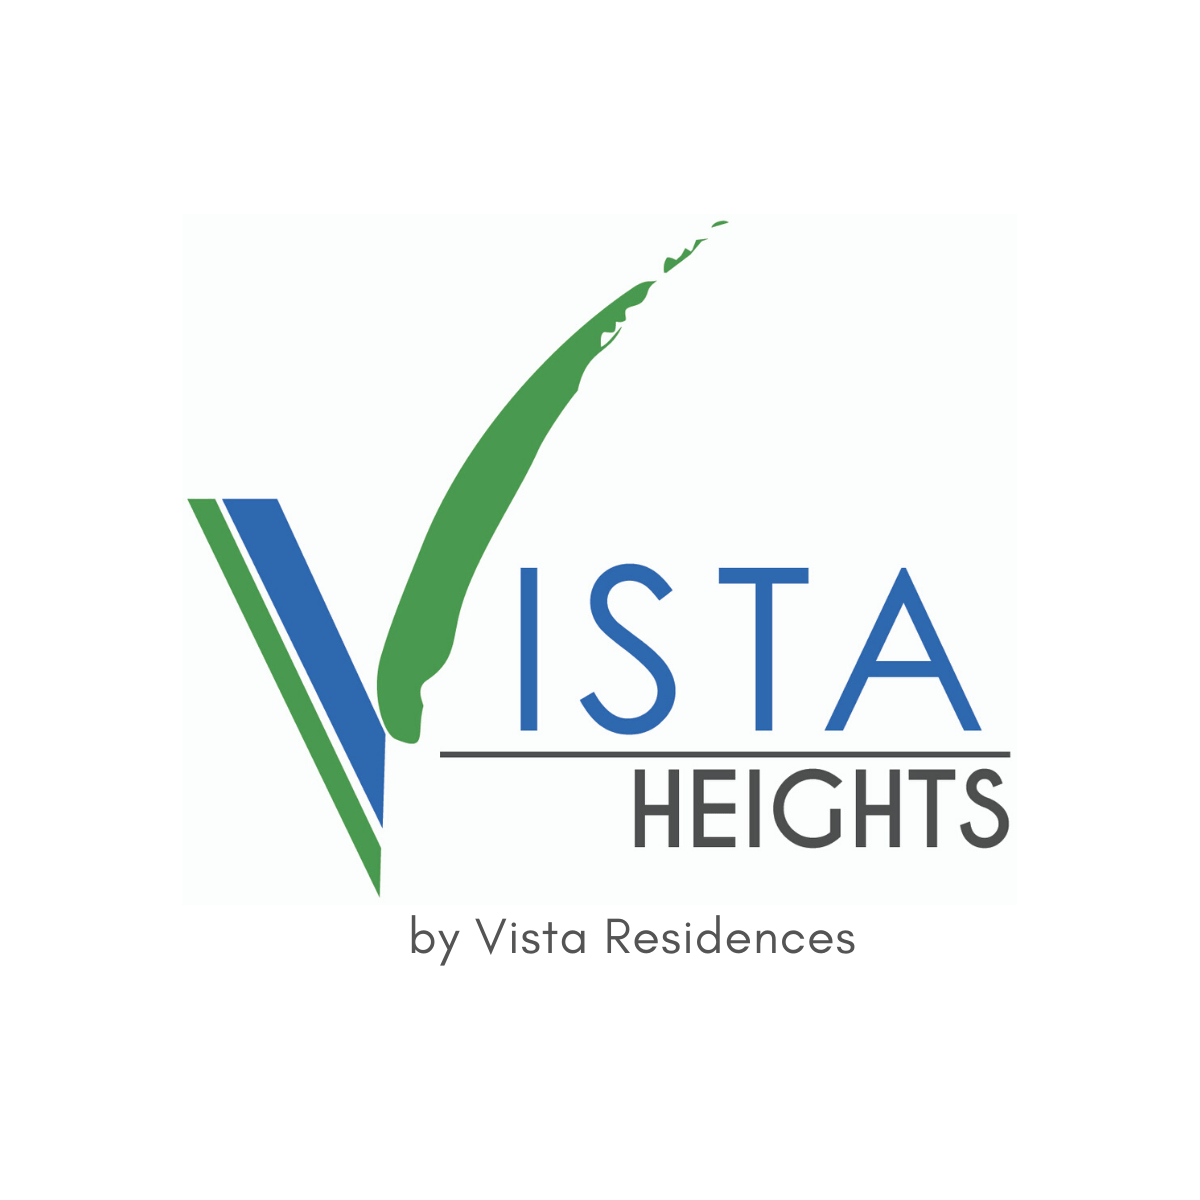 Vista Heights Condo near CEU Manila Vista Residences